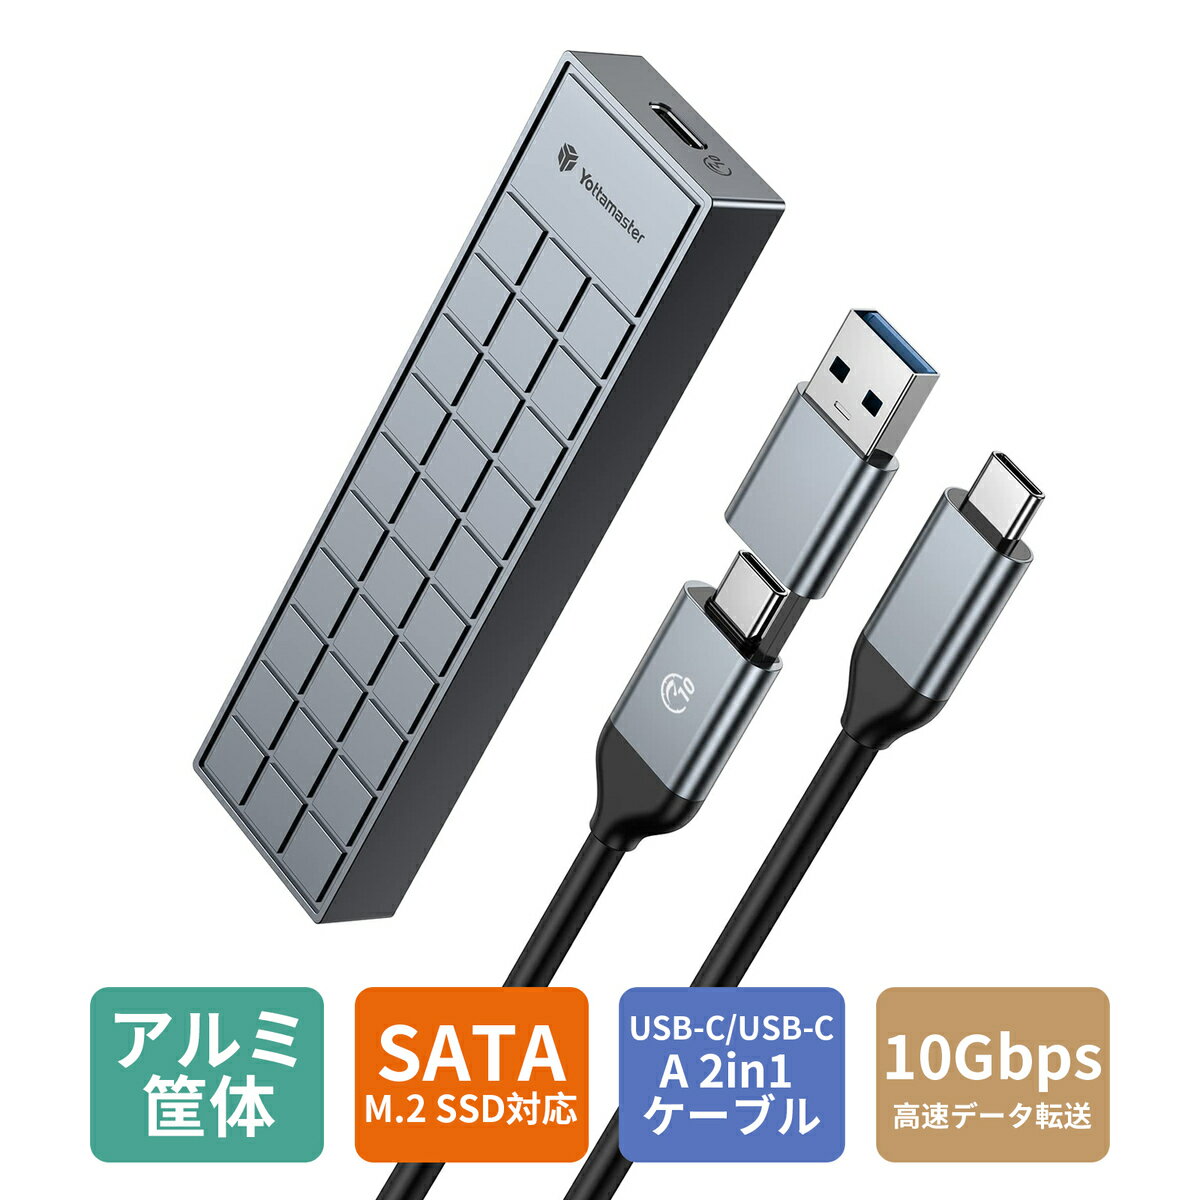 Yottamaster M.2 SSD 外付けケース SATA&NVMe両対応 M.2 SSD ケース USB3.1 Gen2 10Gbps高速転送 UASP&Trim対応 アルミ製 M.2 SSD 外付け エンクロージャ グレー/ロースゴールド